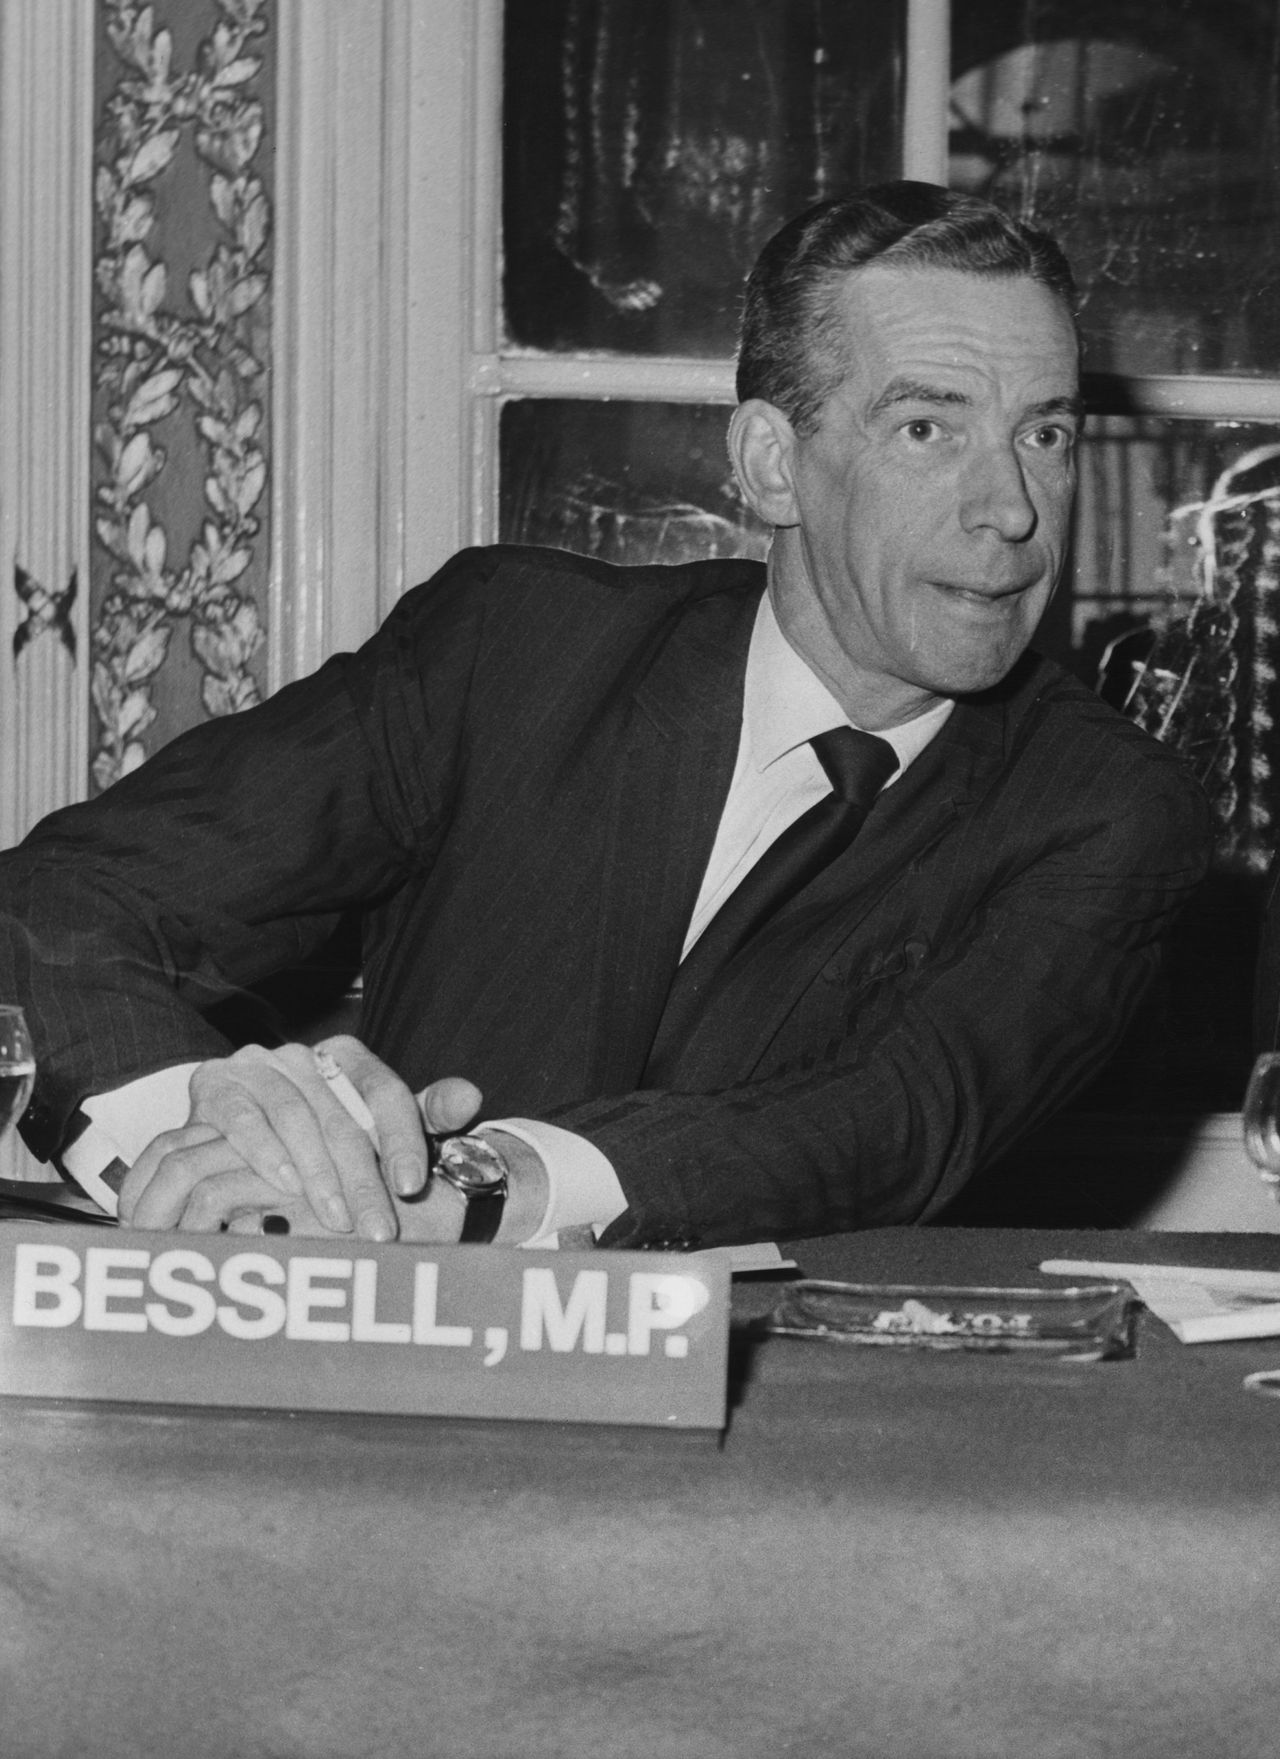 Peter Bessell